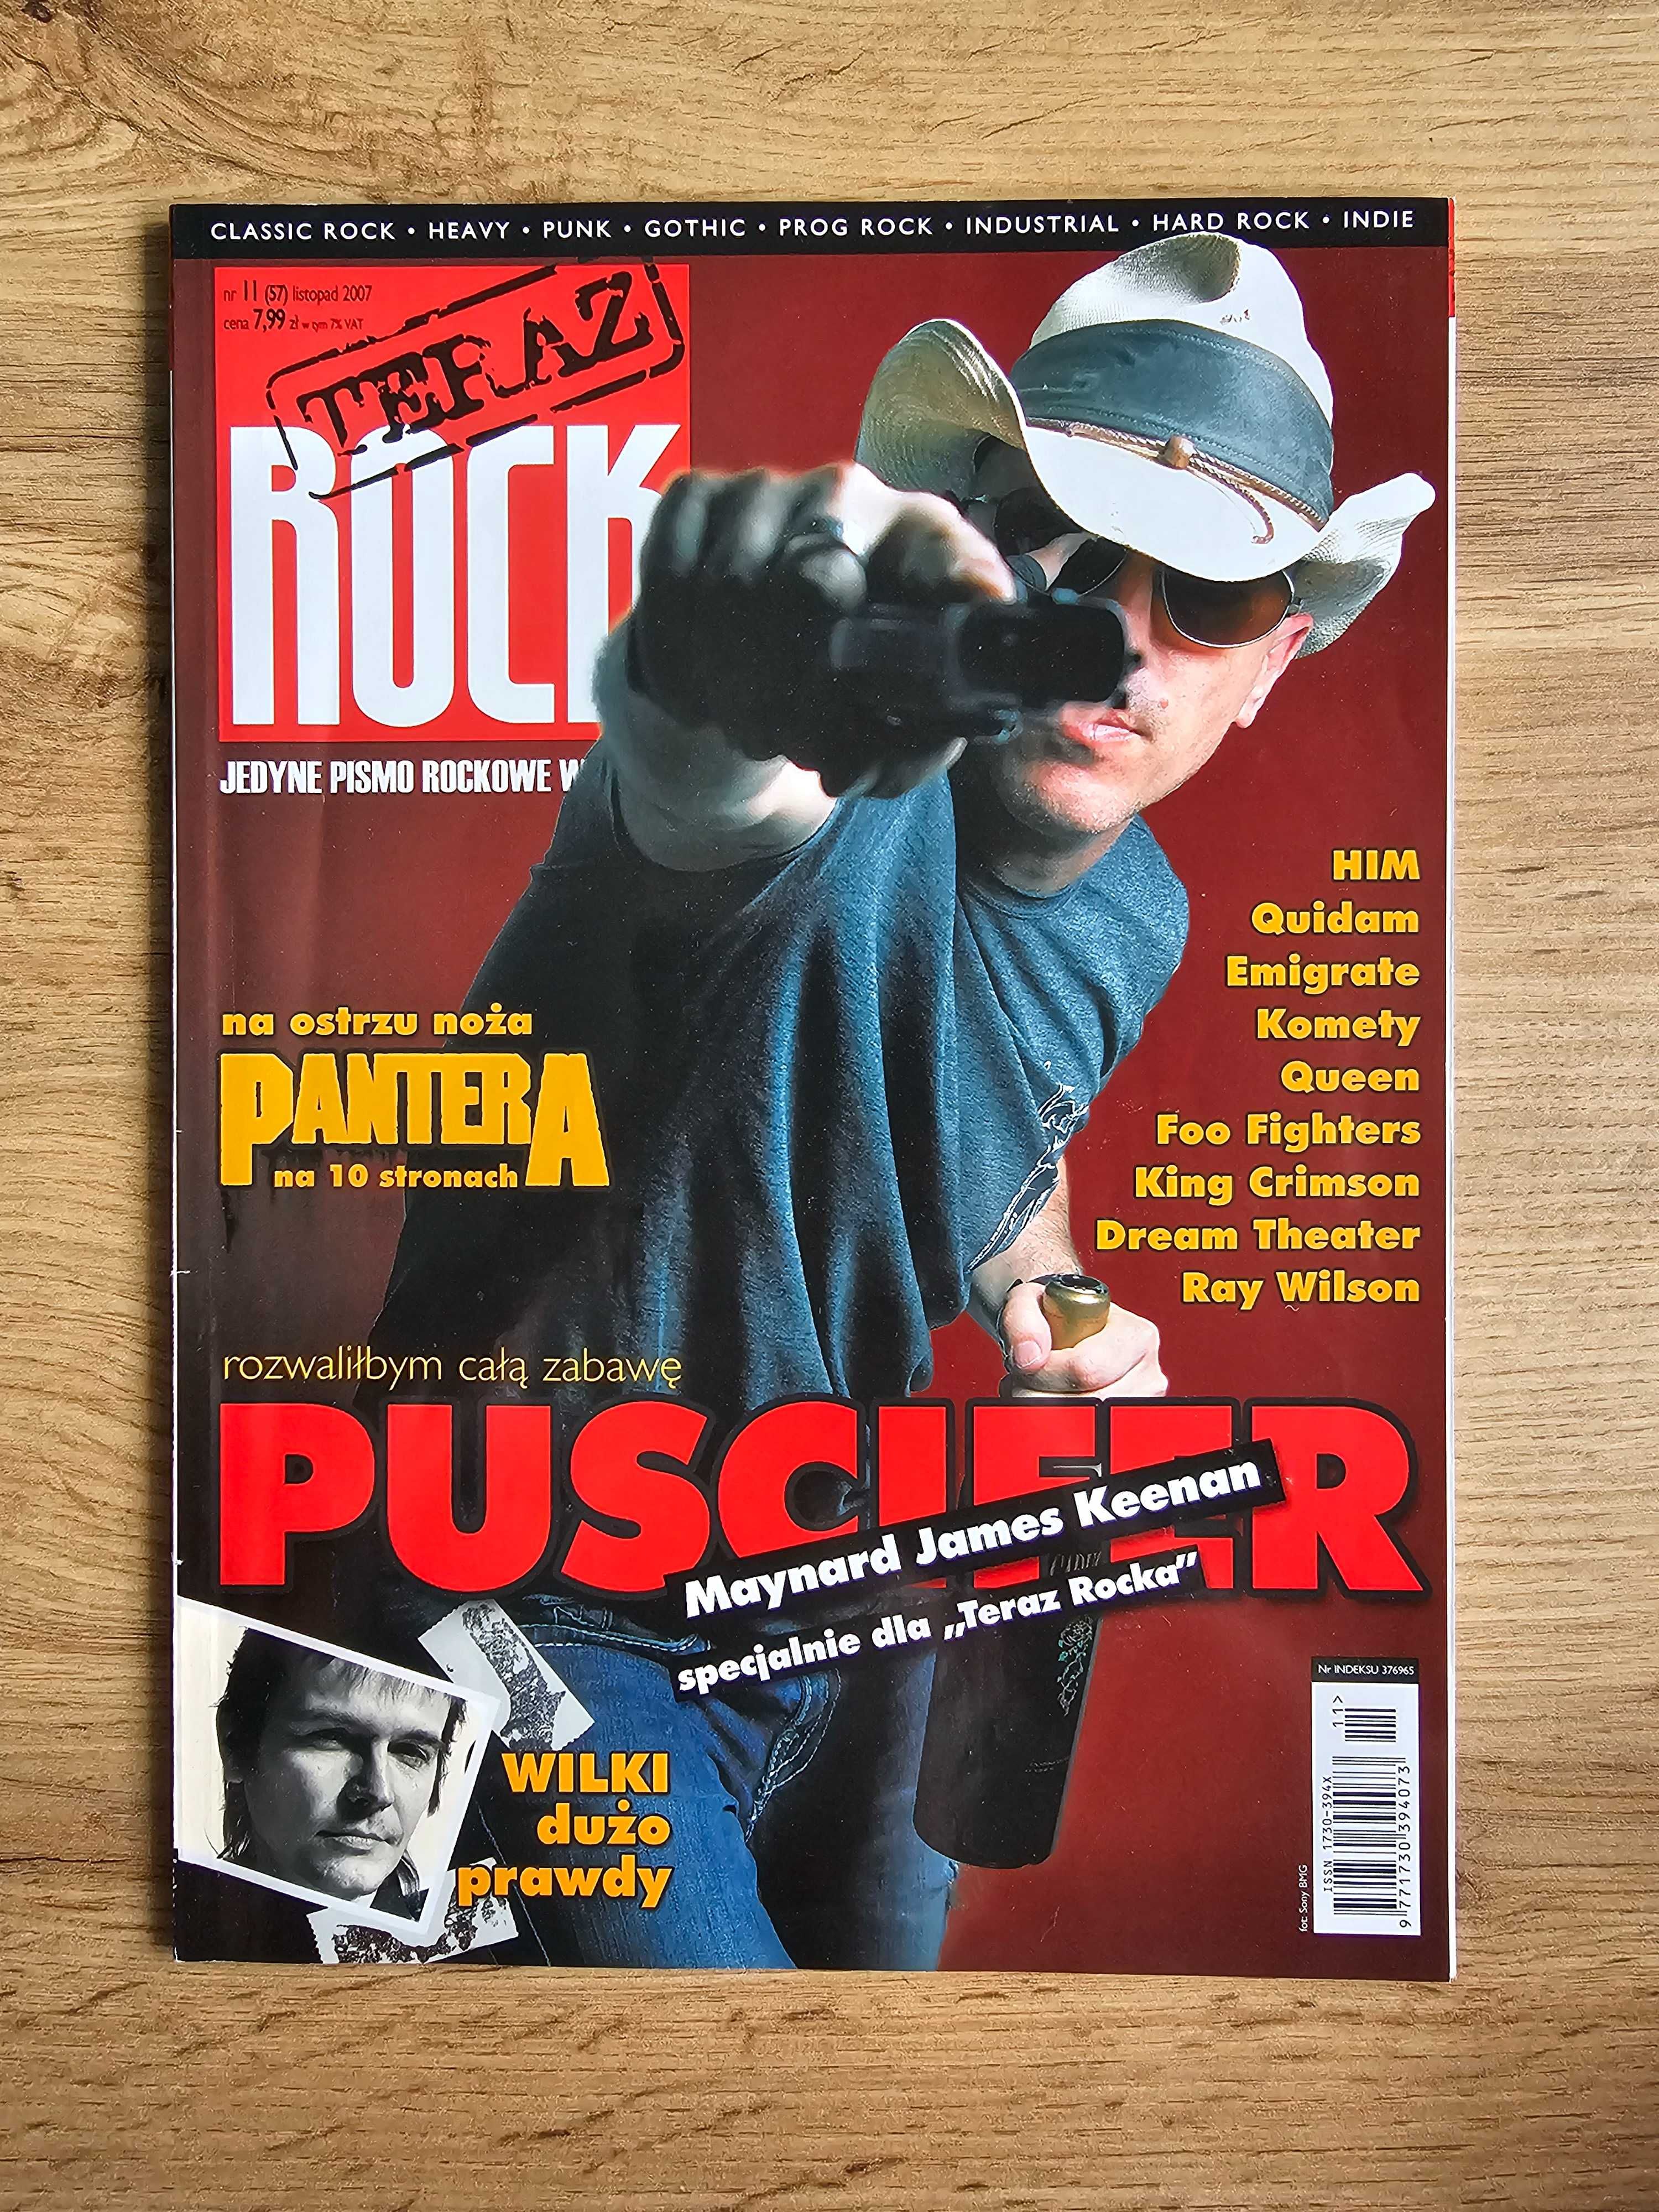 Teraz Rock 11/2007 - Puscifer, Pantera, HIM, Queen, Foo Fighters